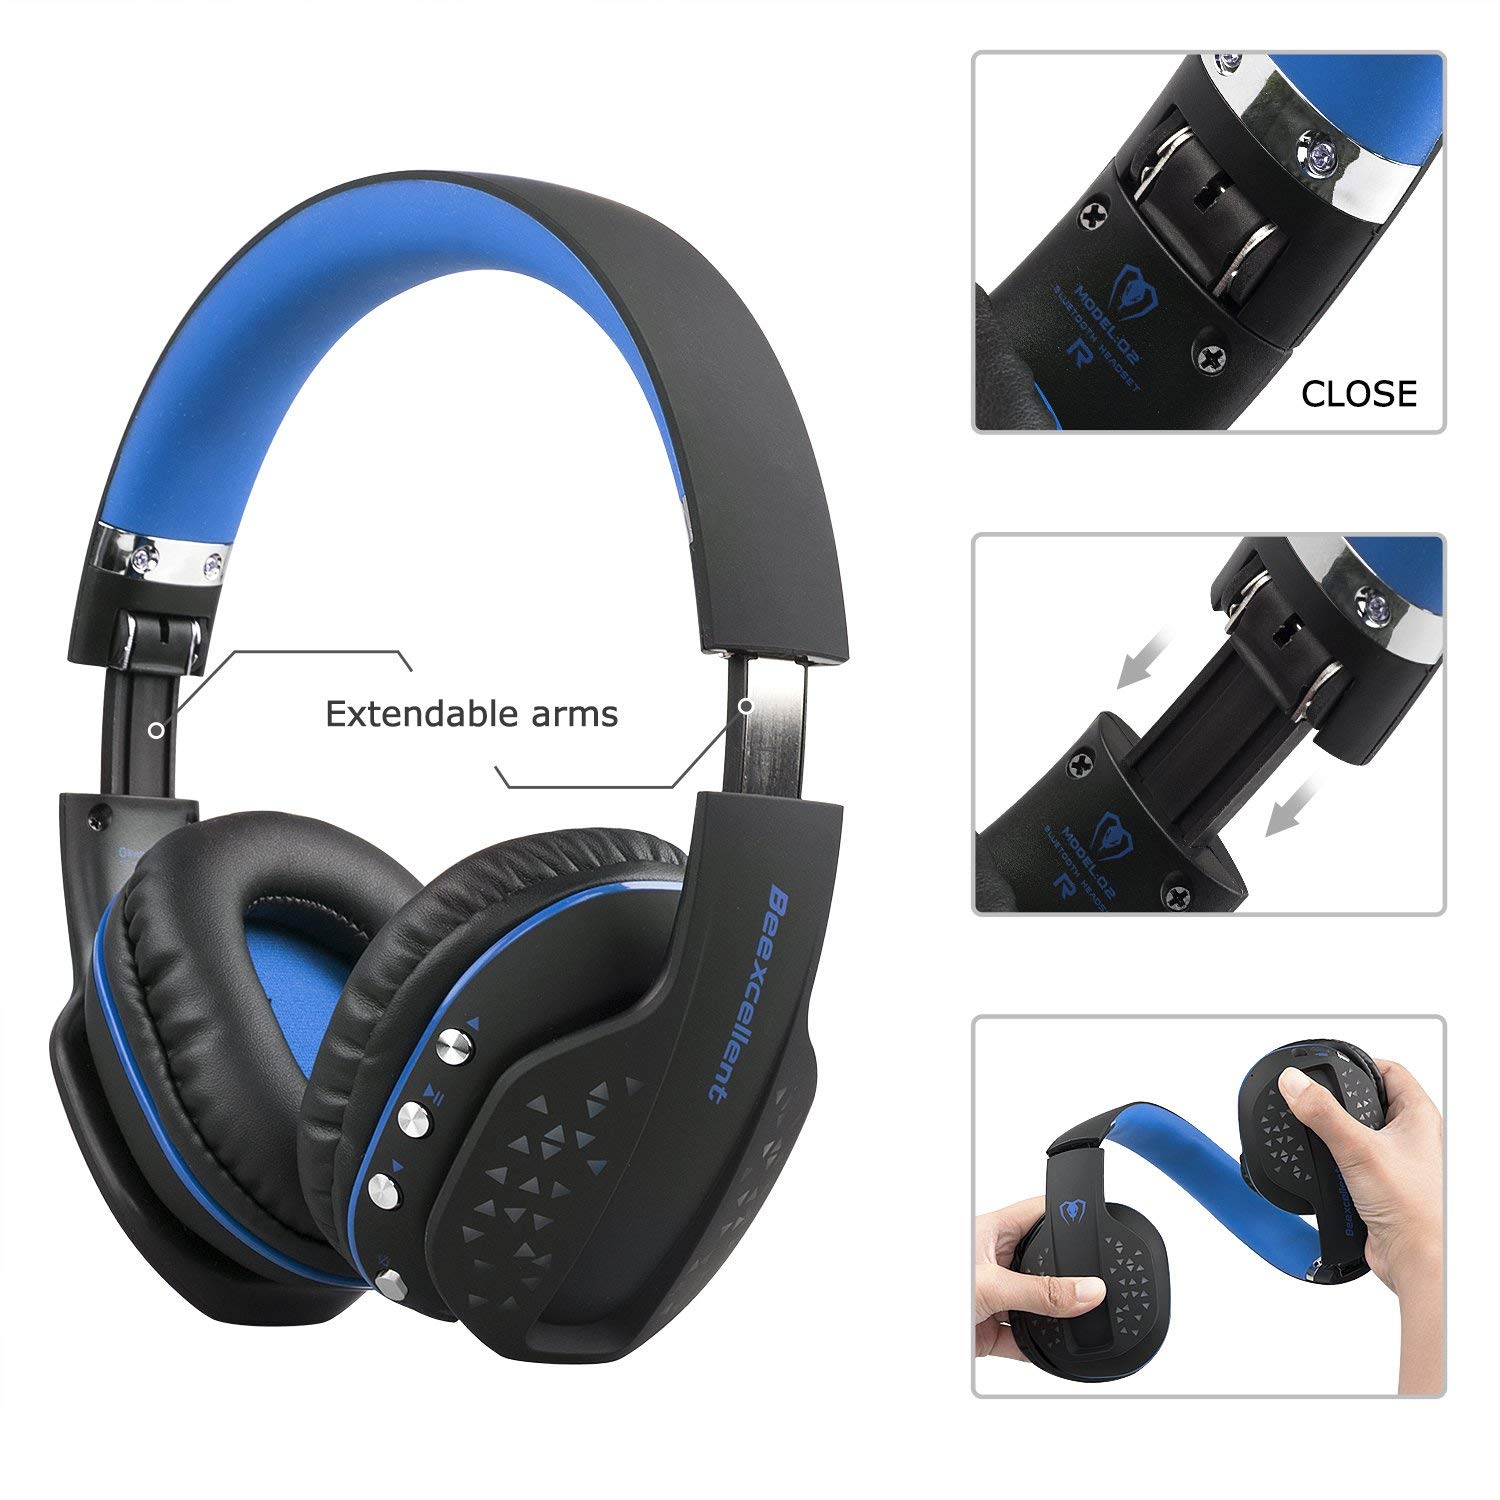 Stereo Gaming Headset Wireless Bluetooth Headphone for ... - 1500 x 1500 jpeg 175kB